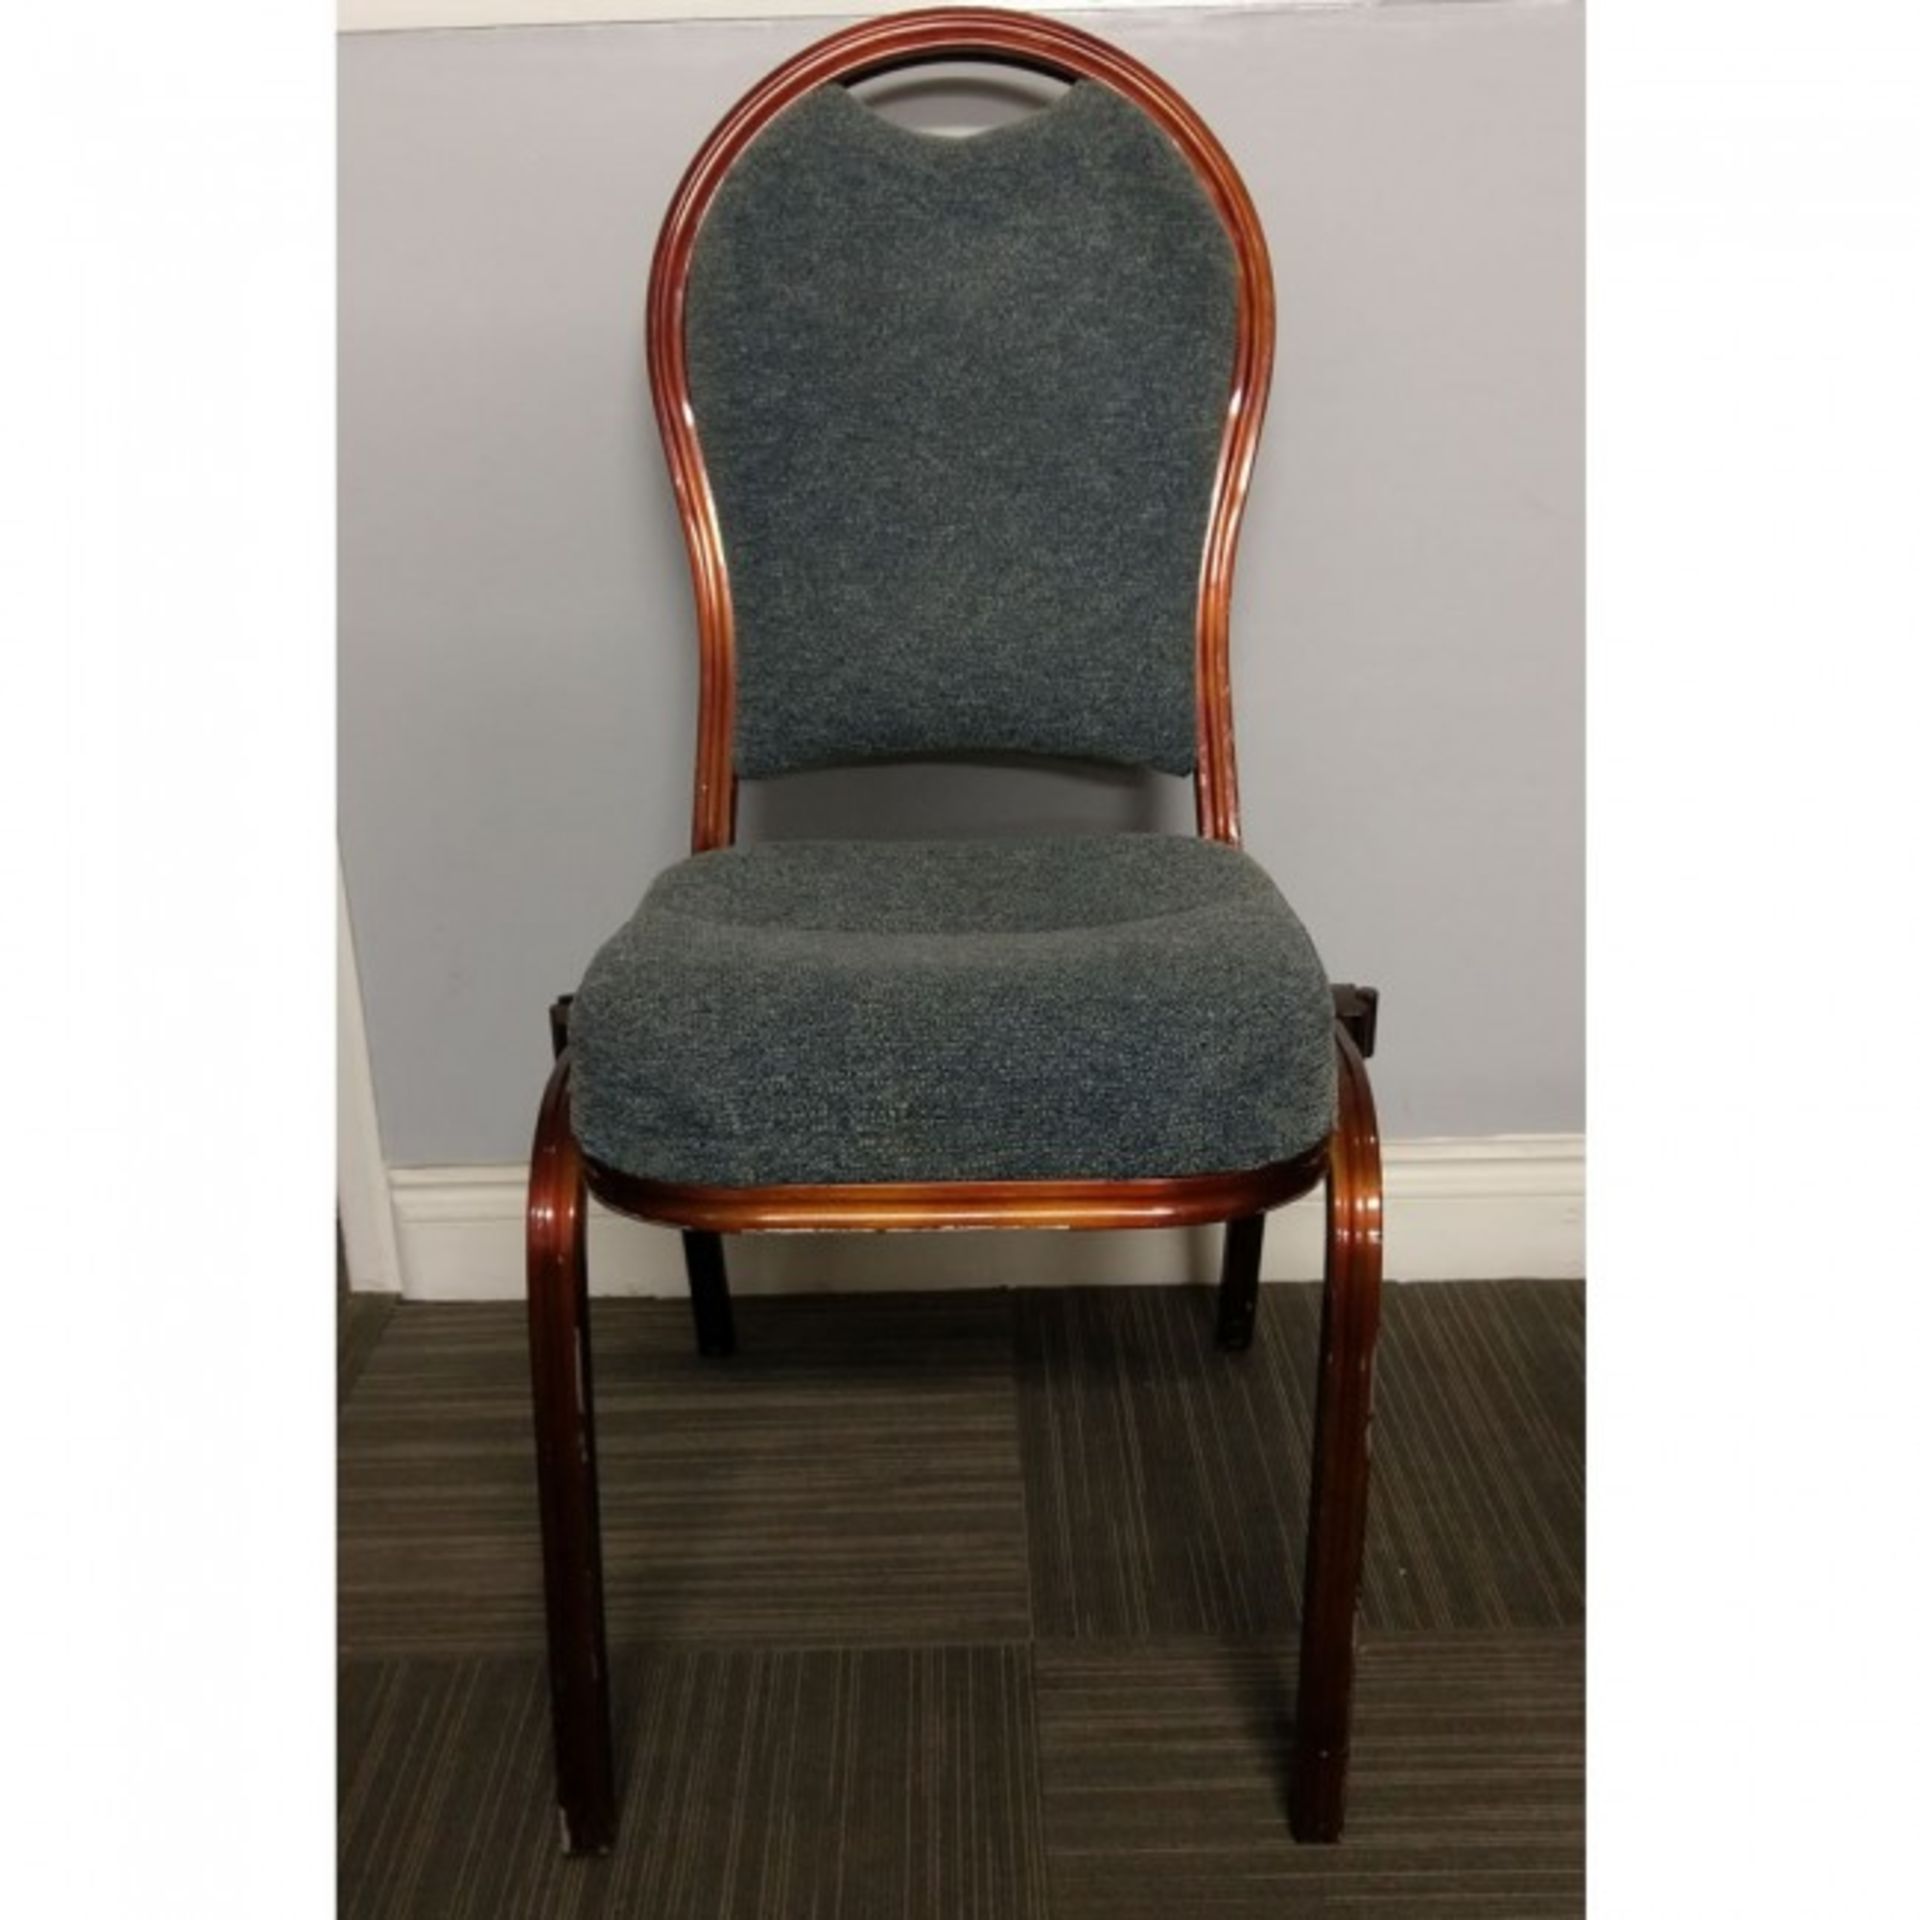 10 x Grey Banquet Chair - Ex Hotel Stock - Aluminium Frame - Image 2 of 4